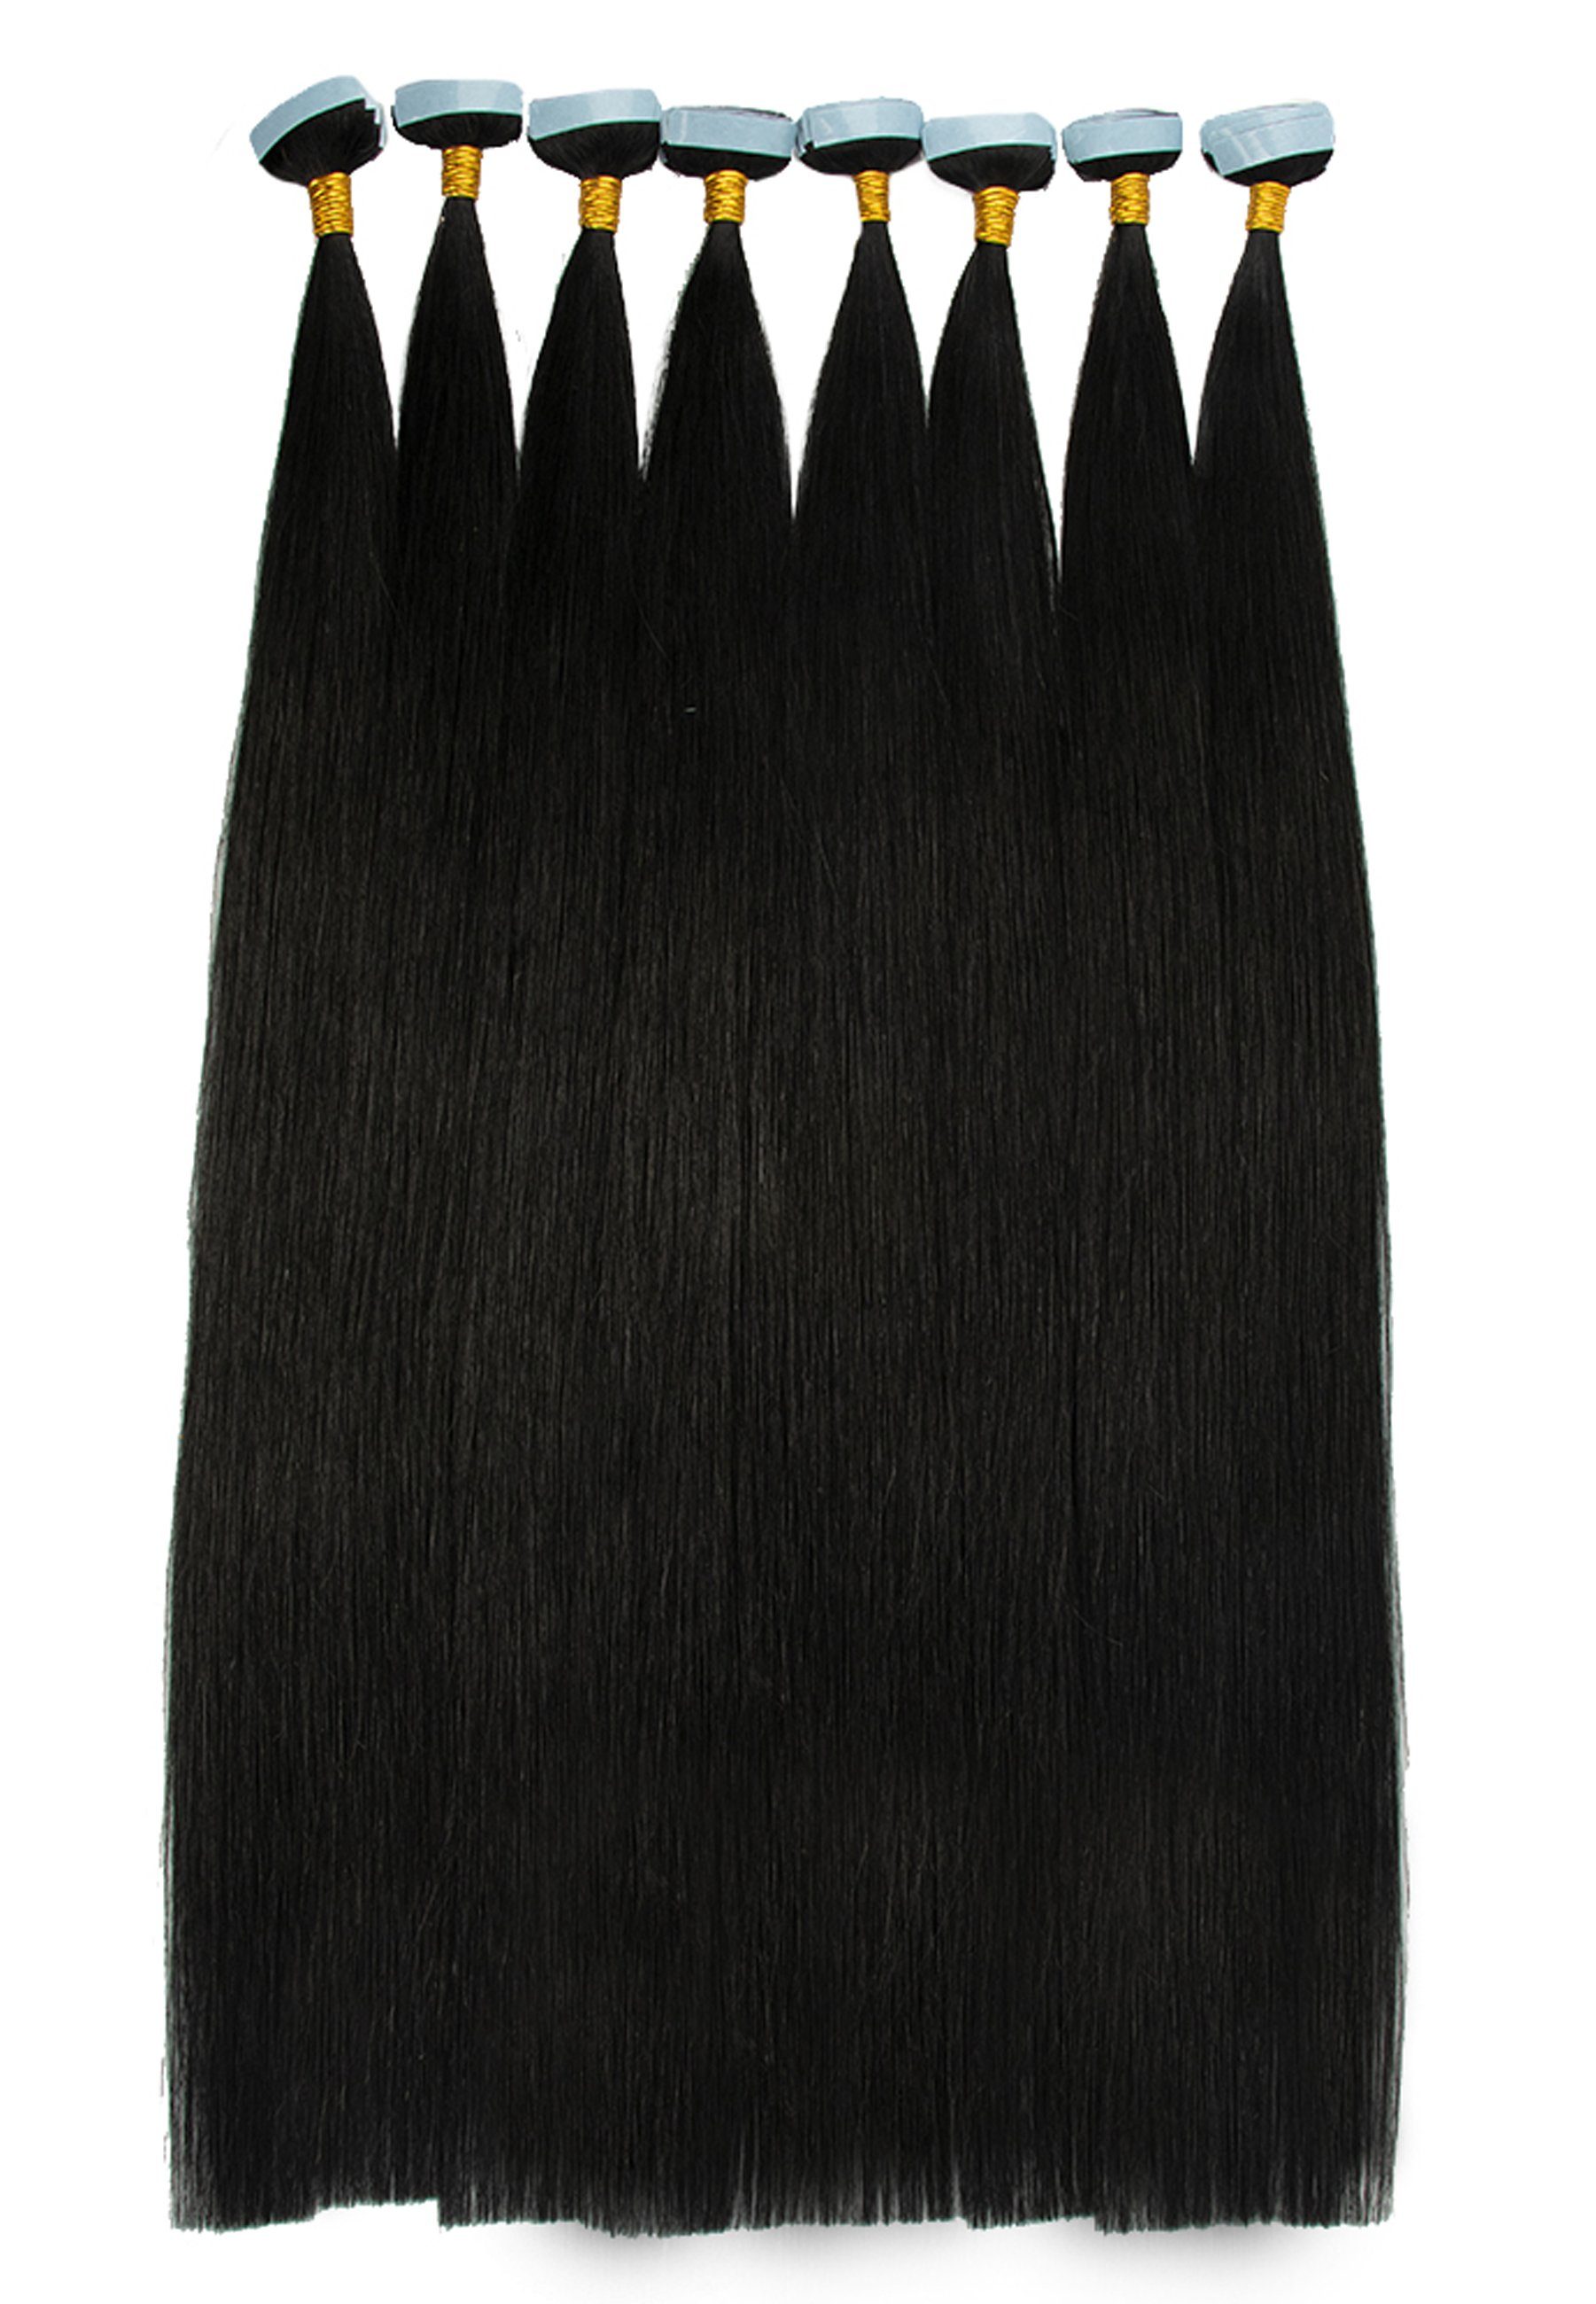 100 Fashion 25 Hair Skin-Wefts Double & Drawn jet cm Remy Echthaar Style YC On-Extension black-60 #1 gr, Tape Echthaar-Extension Menschenhaar %